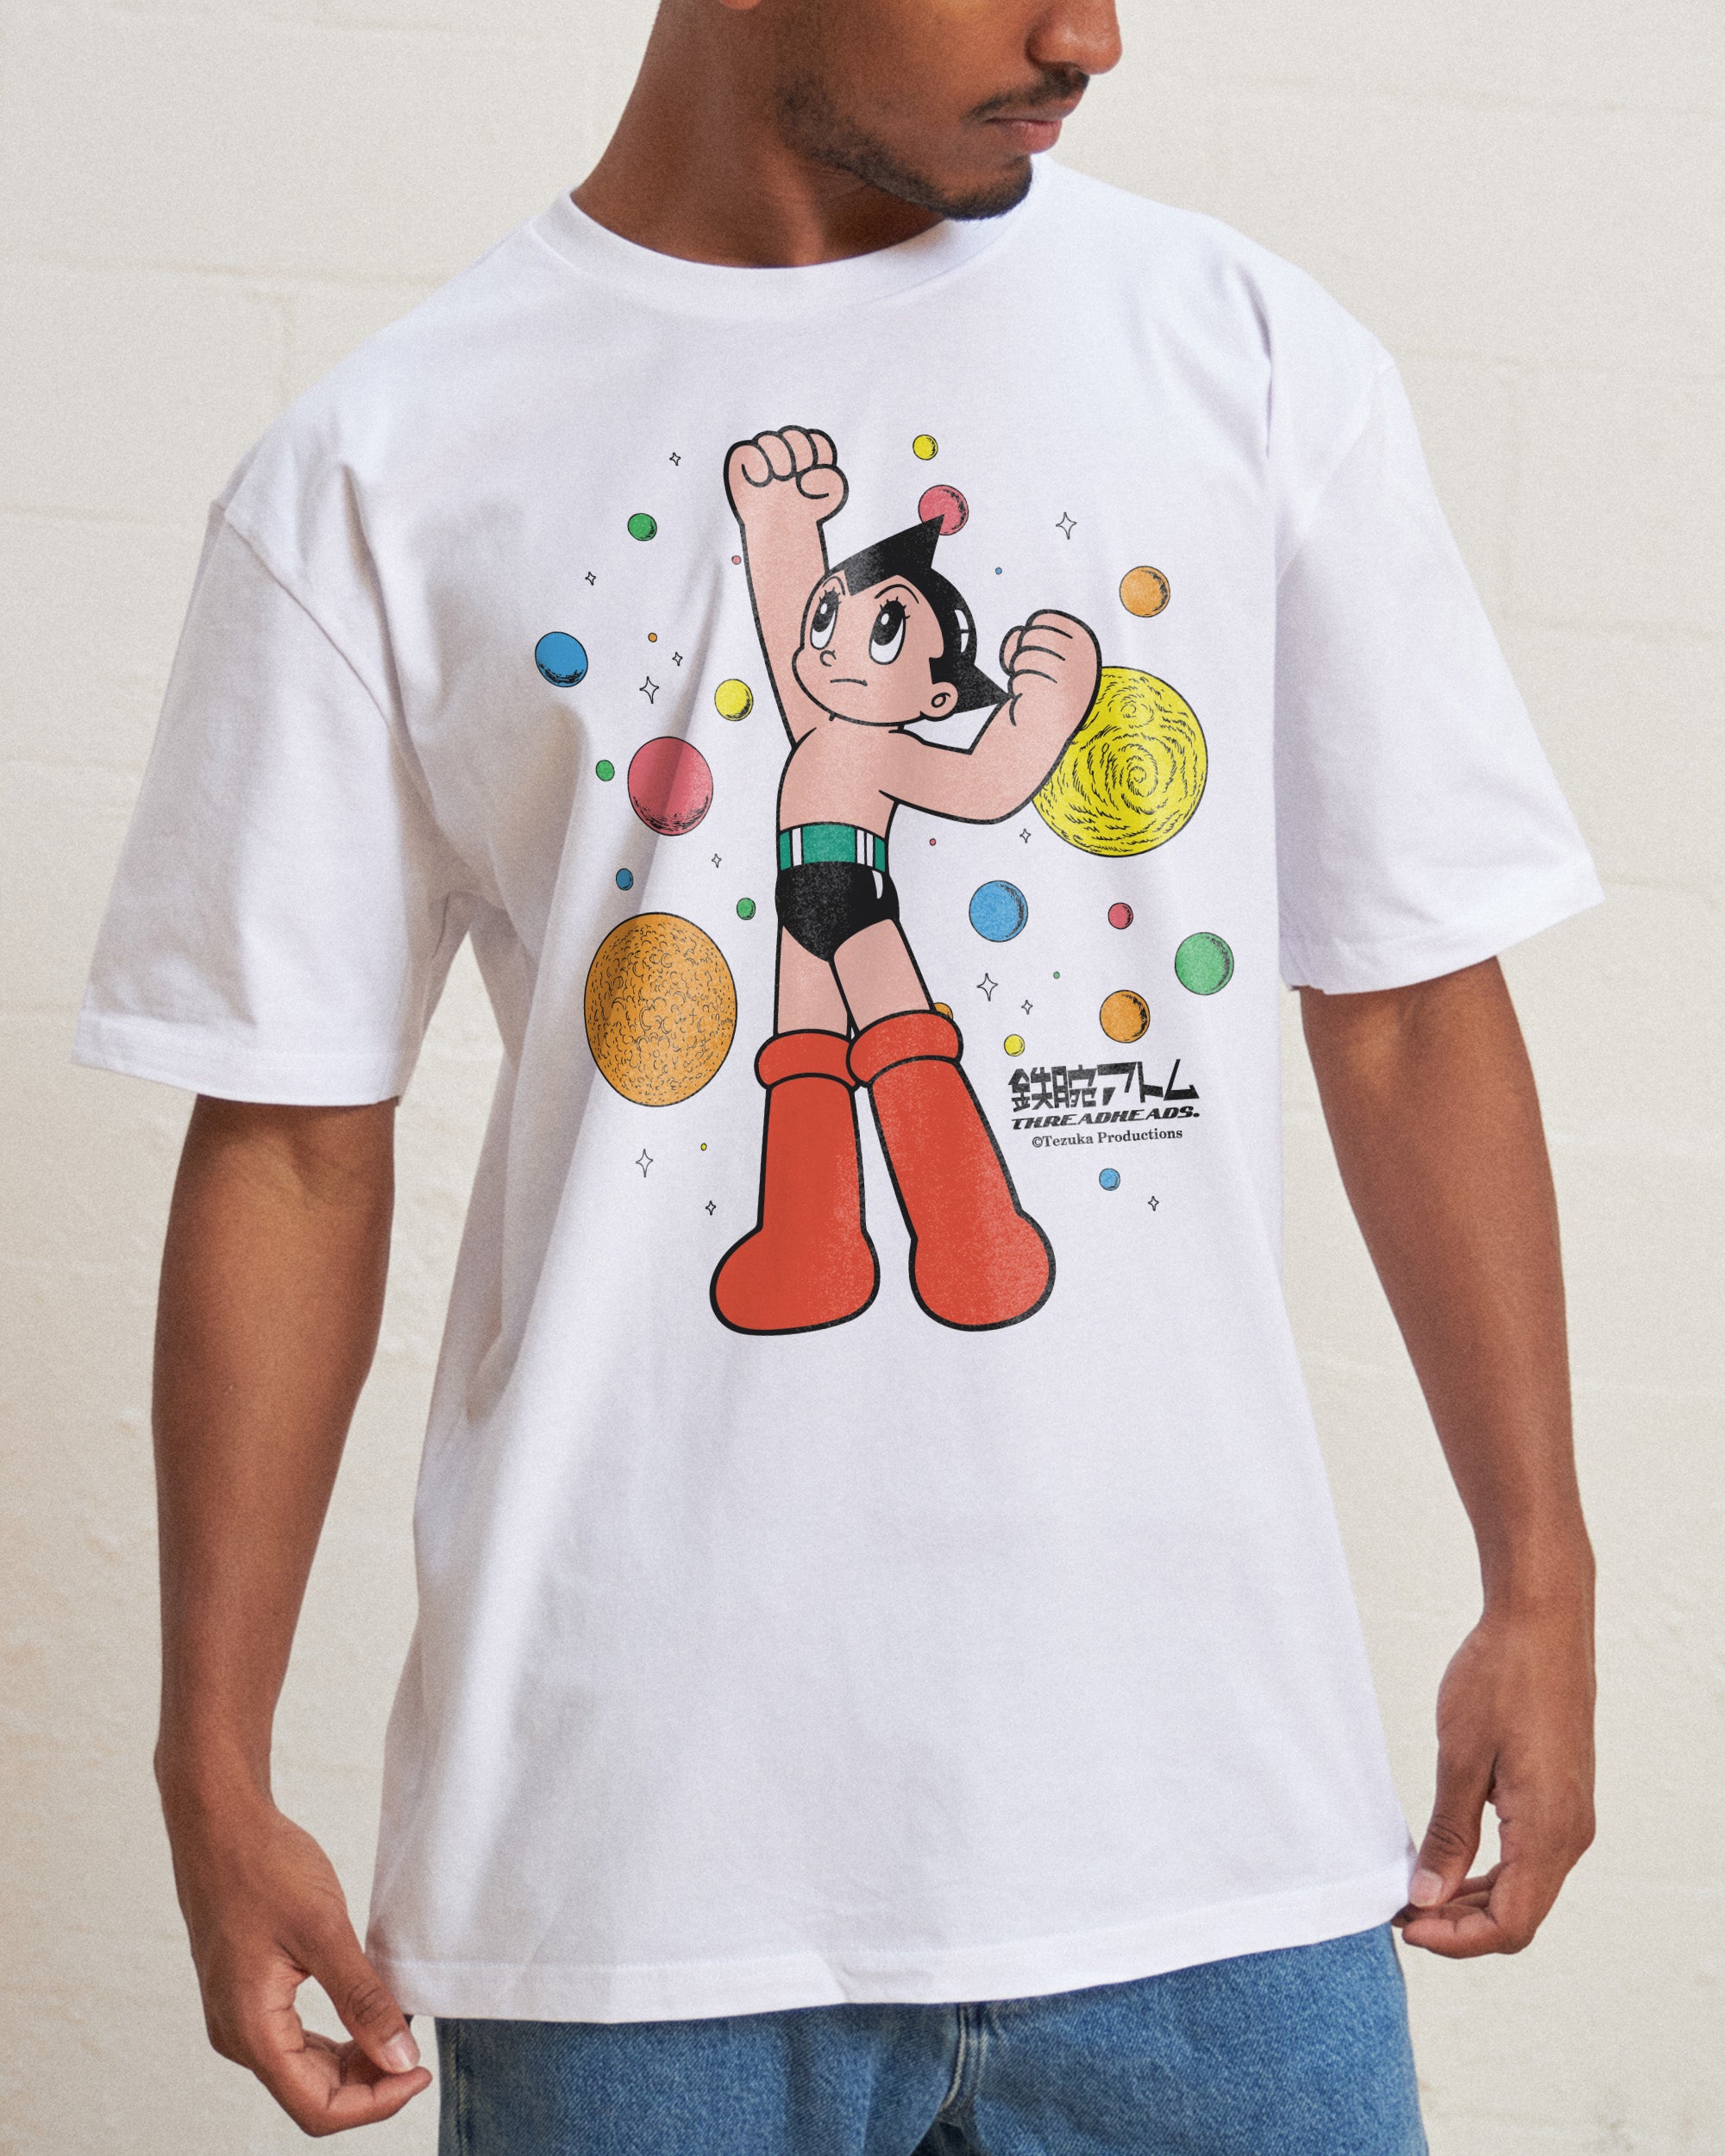 Astro Boy Planets T-Shirt